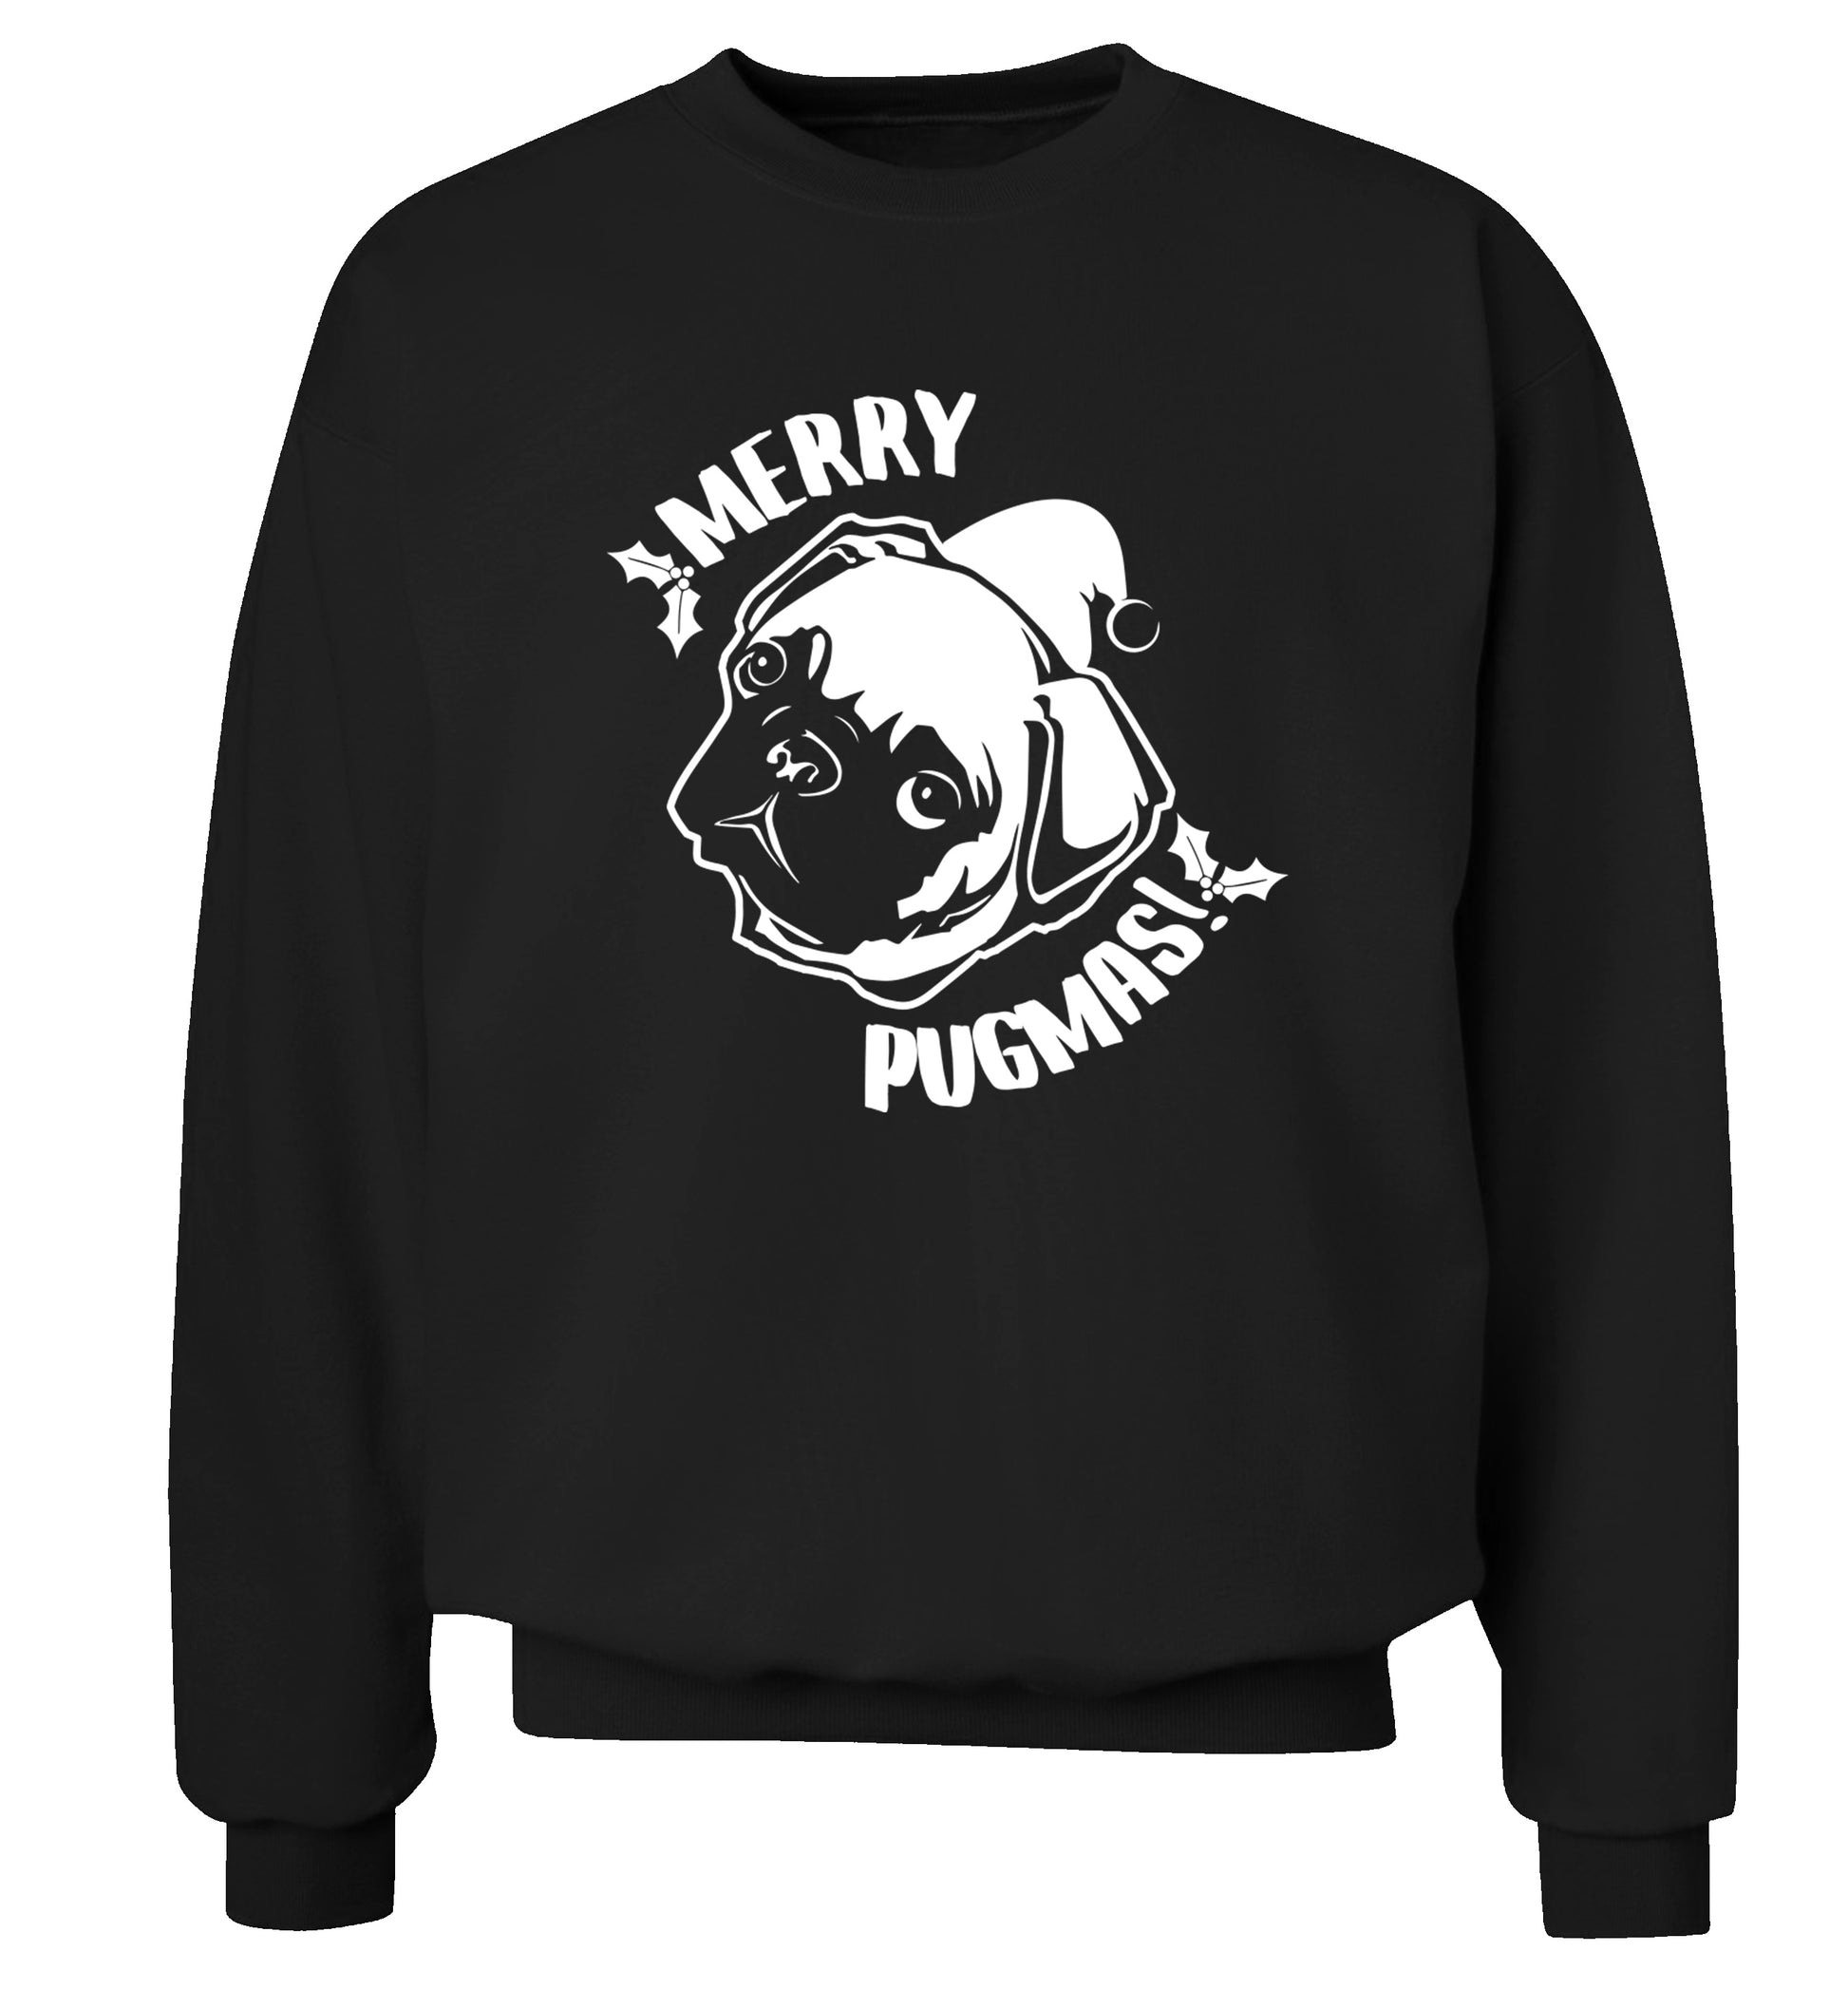 Merry Pugmas Adult's unisex black Sweater 2XL